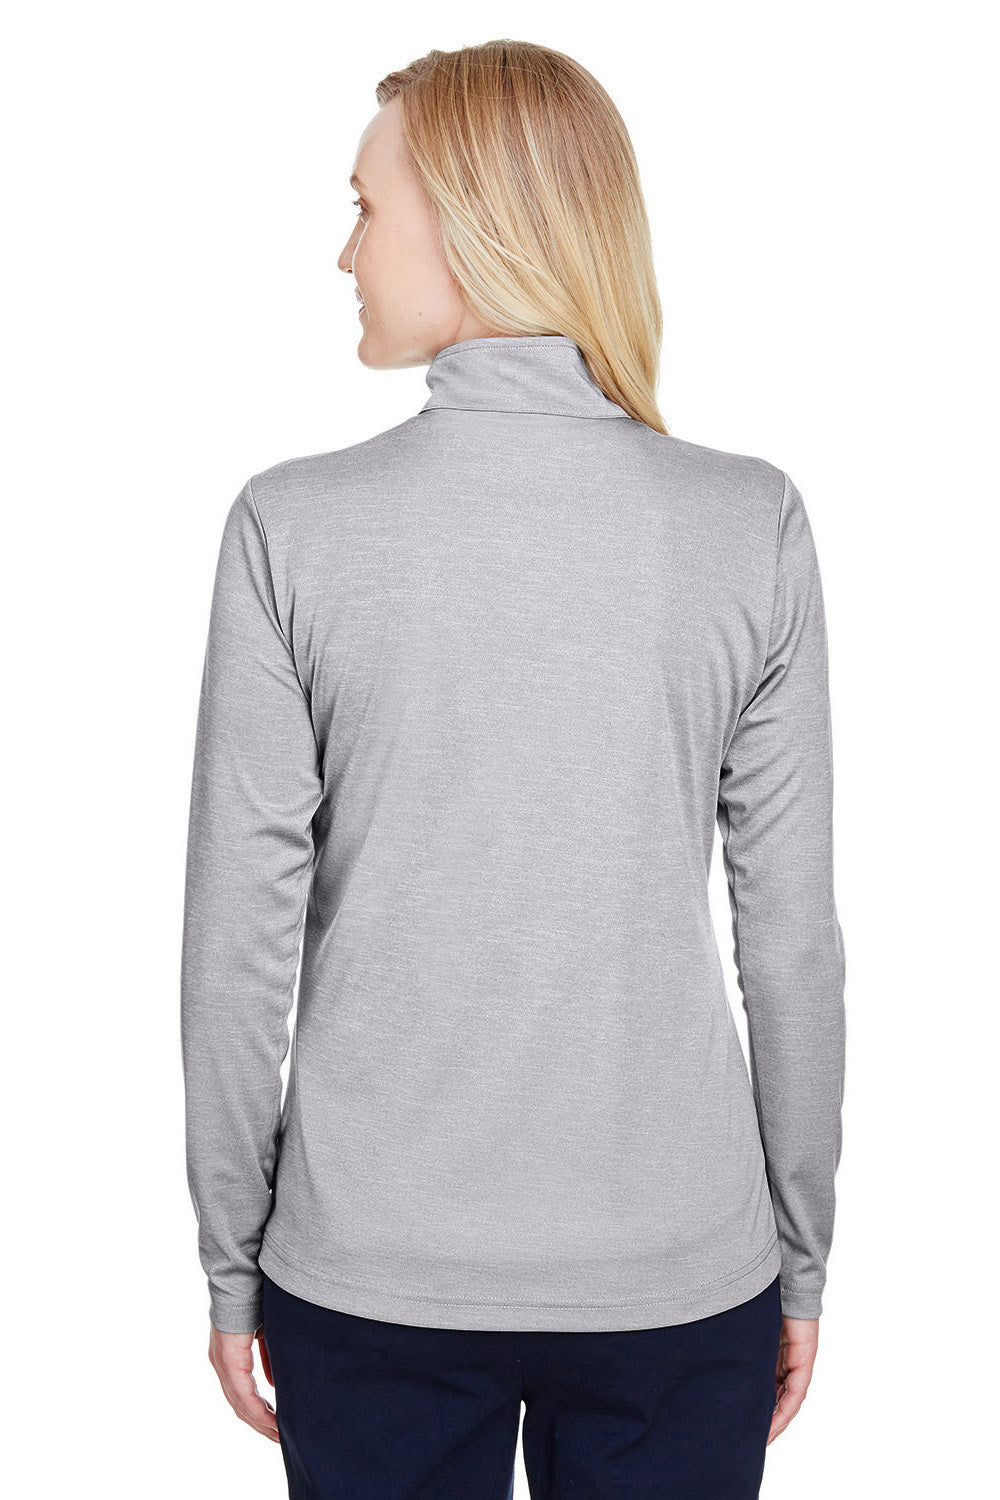 Team 365 TT31HW Womens Zone Sonic Performance Moisture Wicking 1/4 Zip Sweatshirt Grey Back